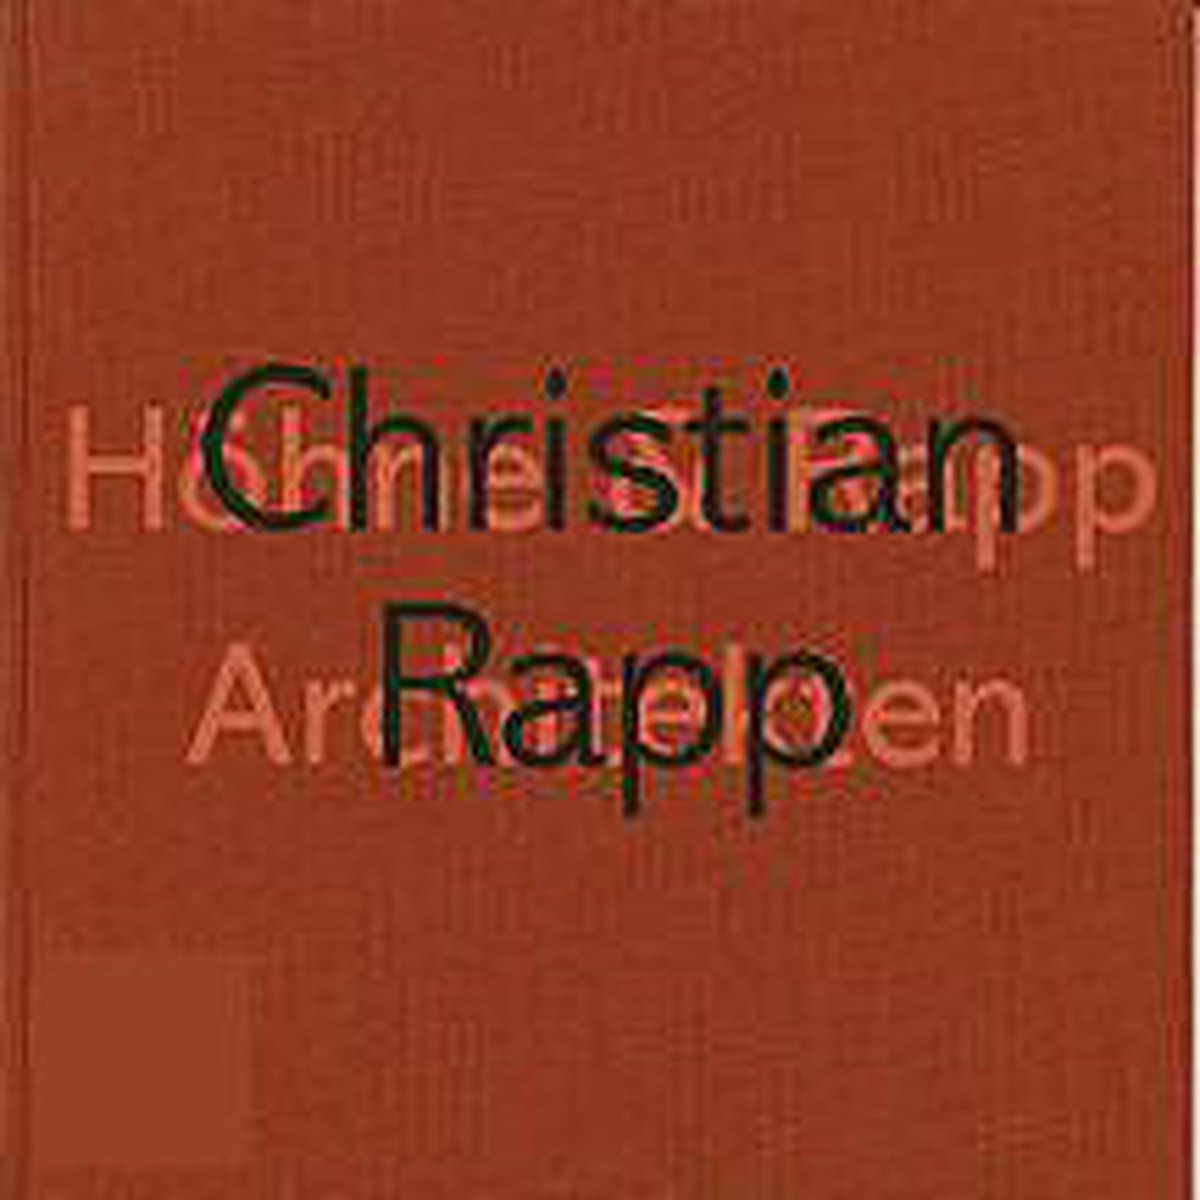 Christian Rapp - Hoehne and Rapp Architekten